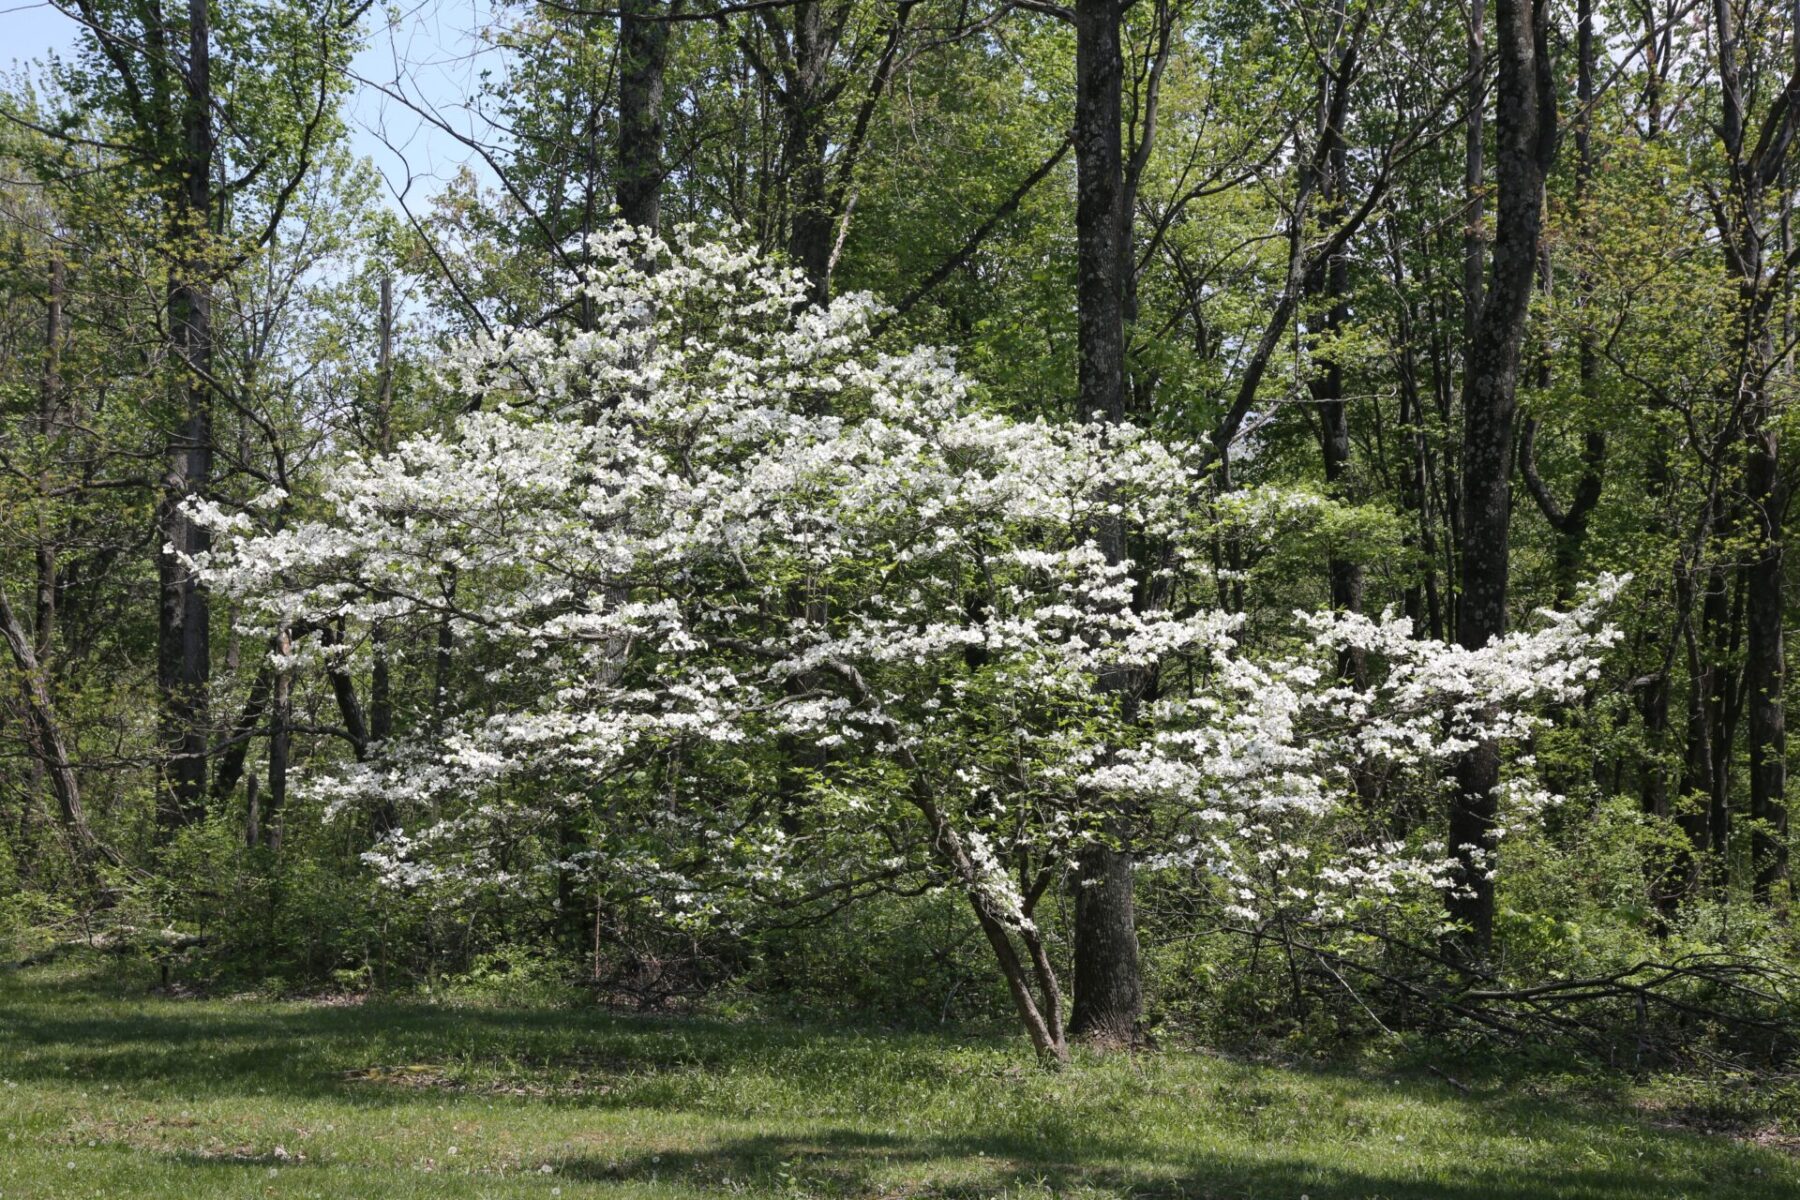 Flowering White Dogwood Cornus